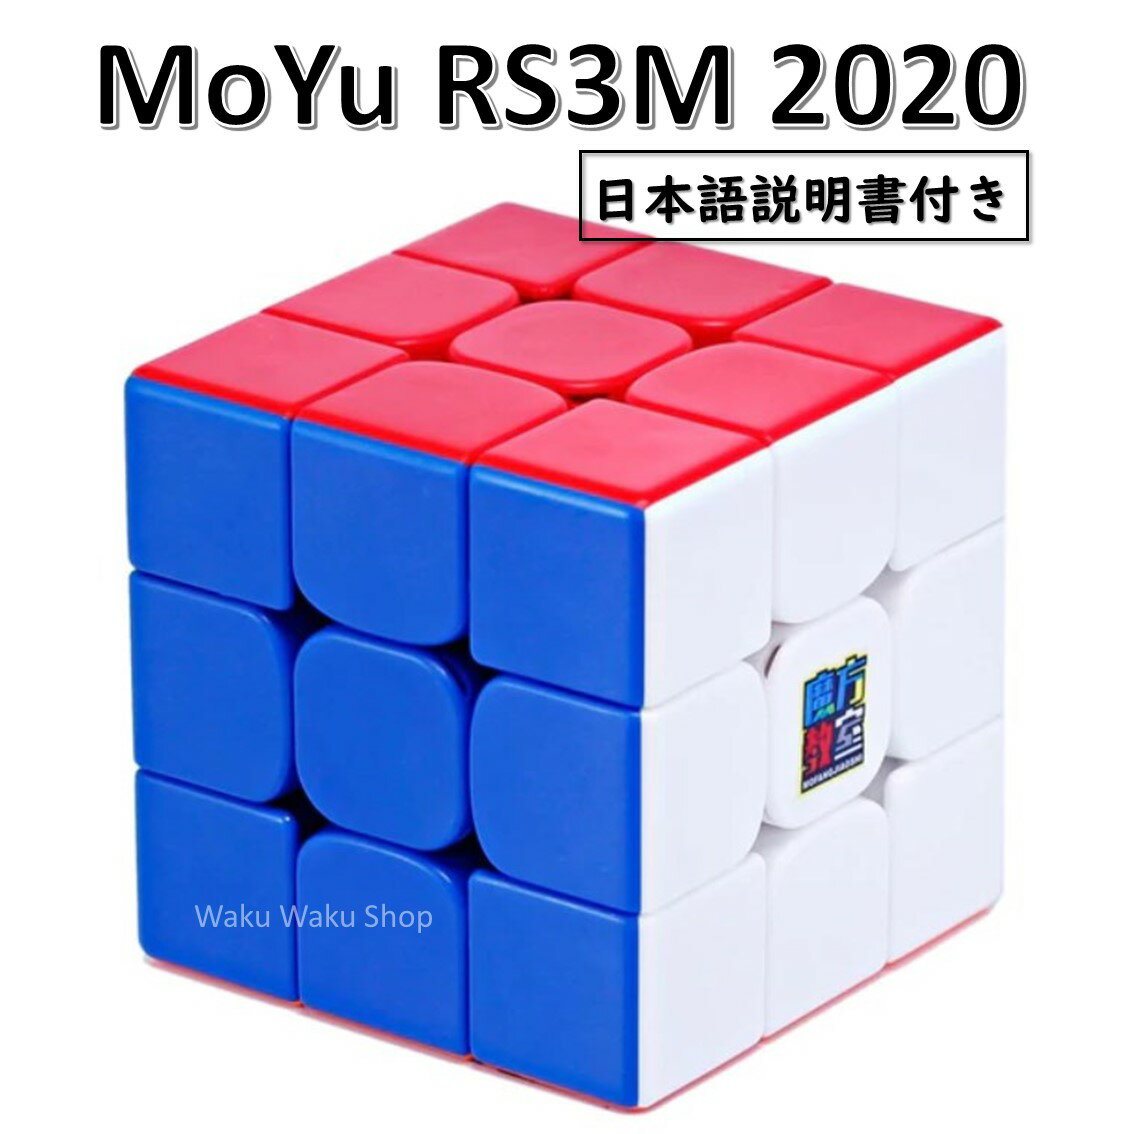    Moyu Cubing Classroom RS3M 2020 磁石搭載 3x3x3キューブ ステッカーレス ルービックキューブ おすすめ なめらか